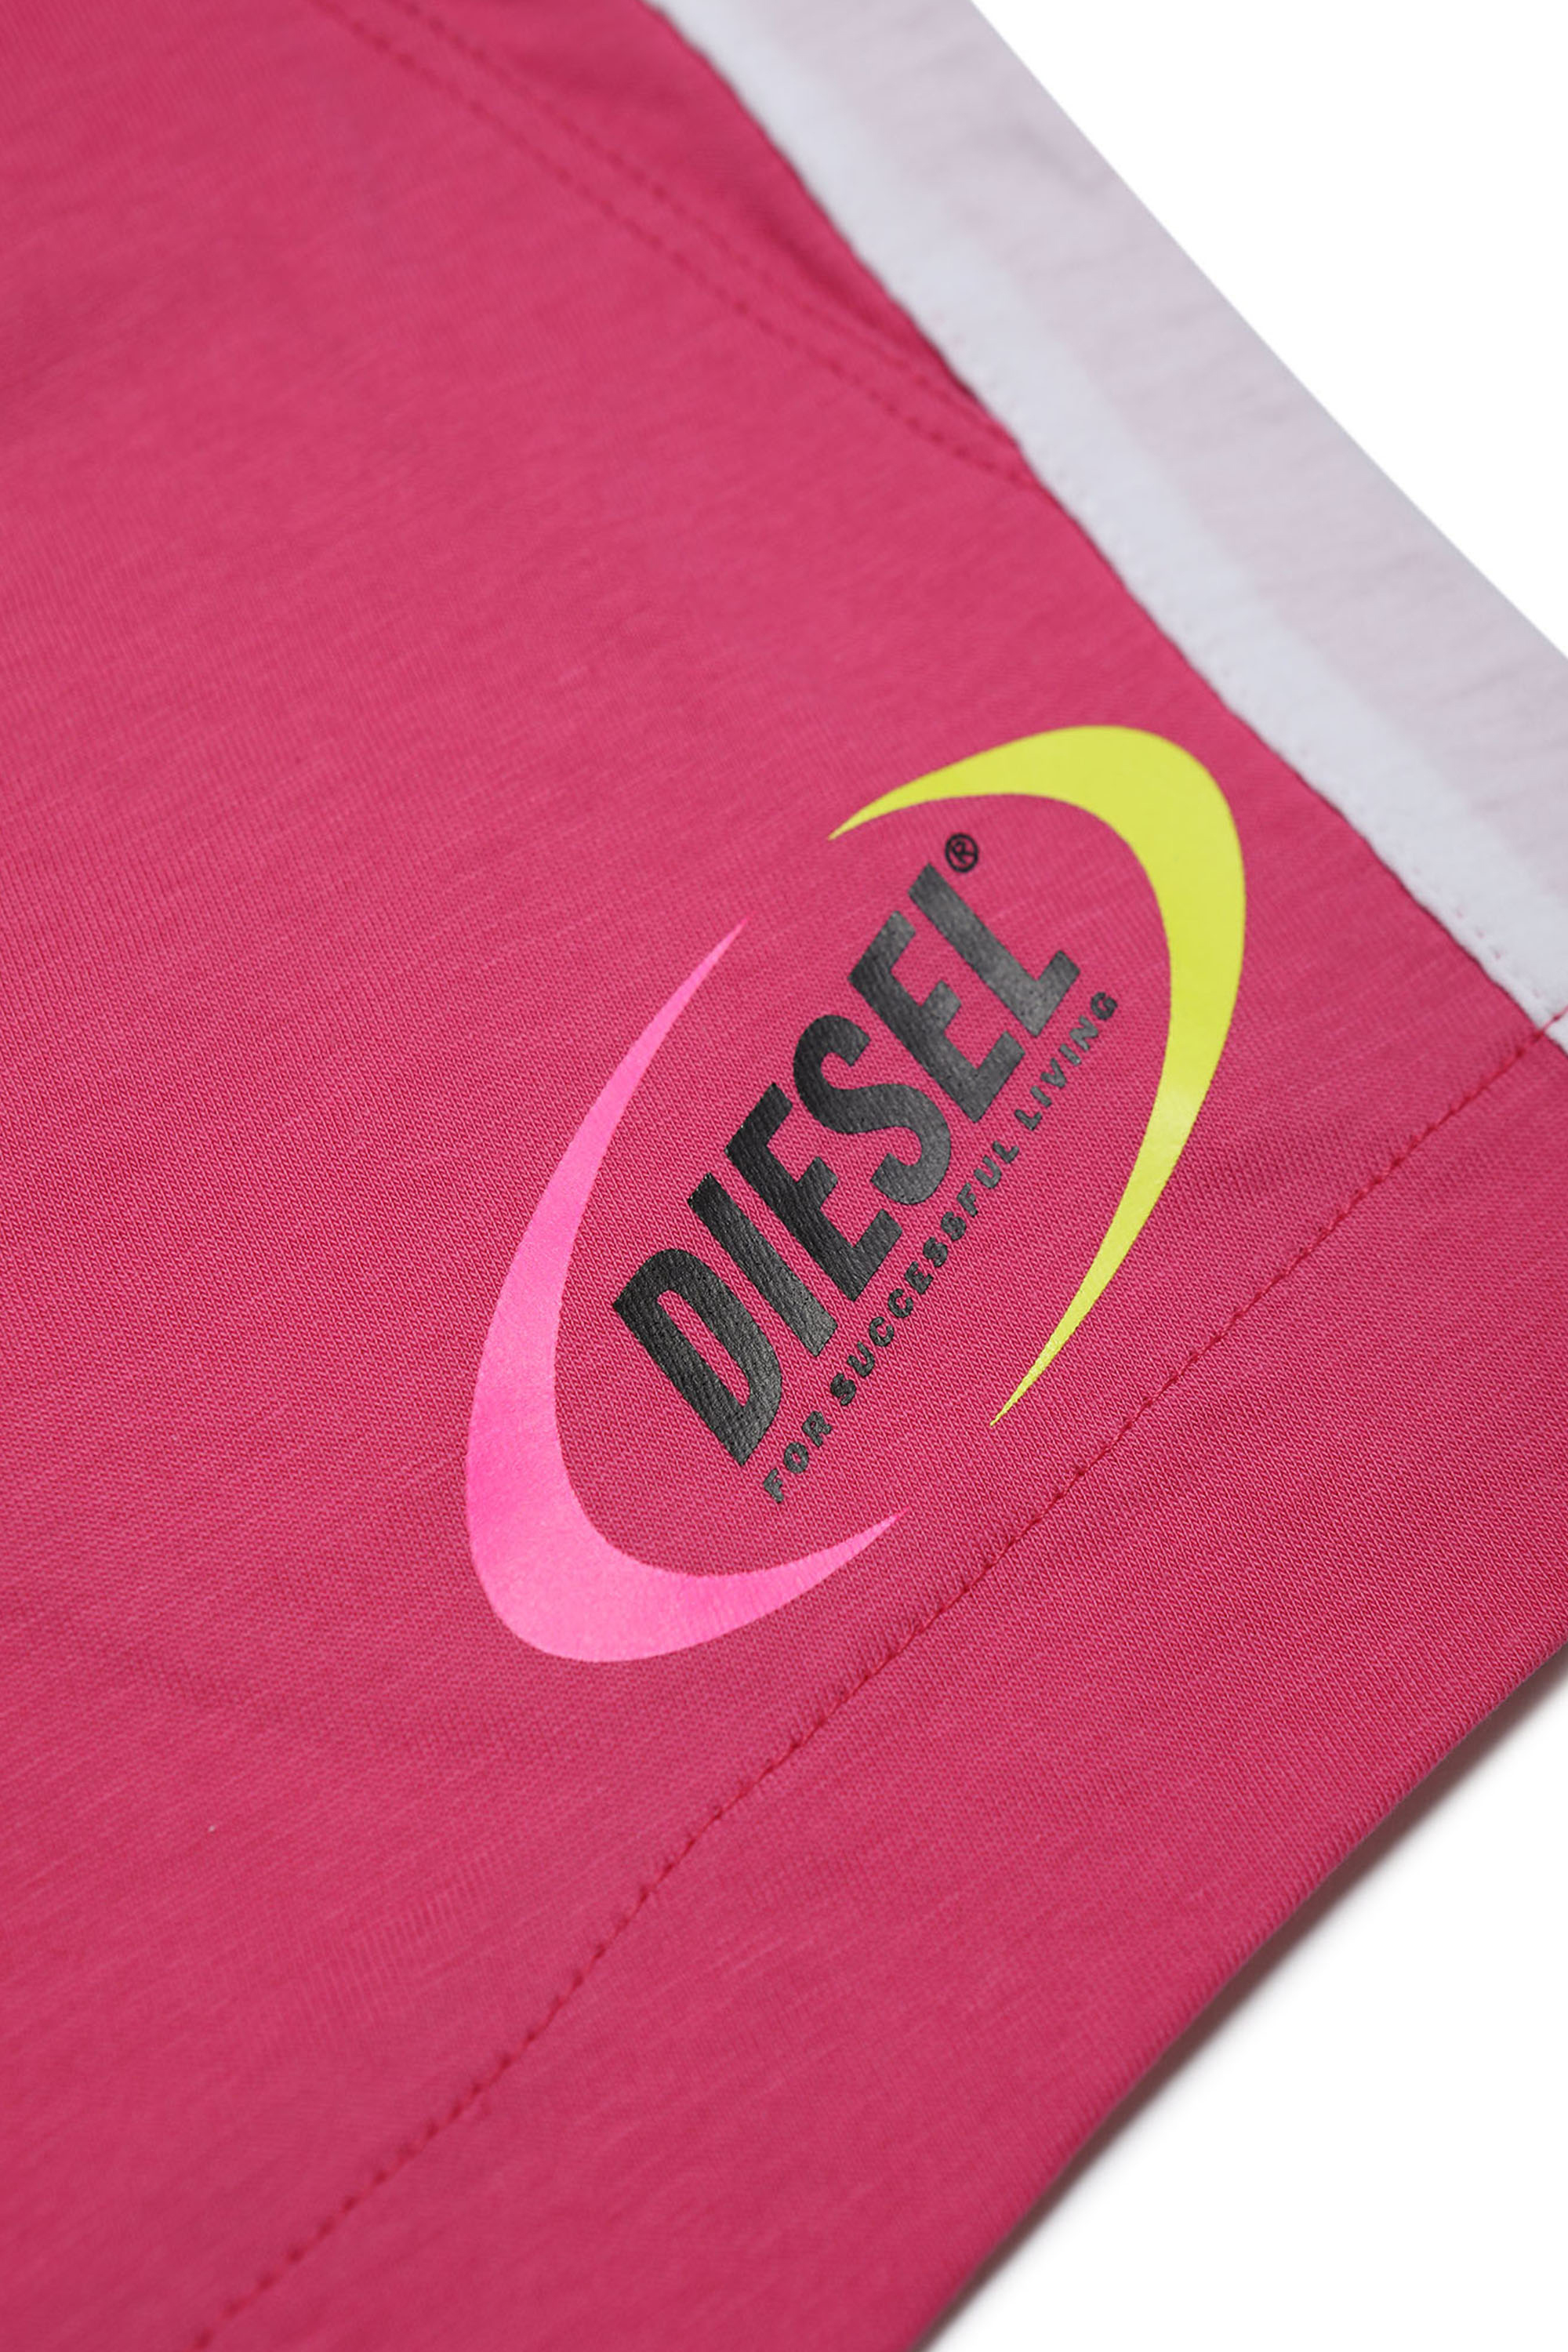 Diesel - MPEPRI, Rosa - Image 3